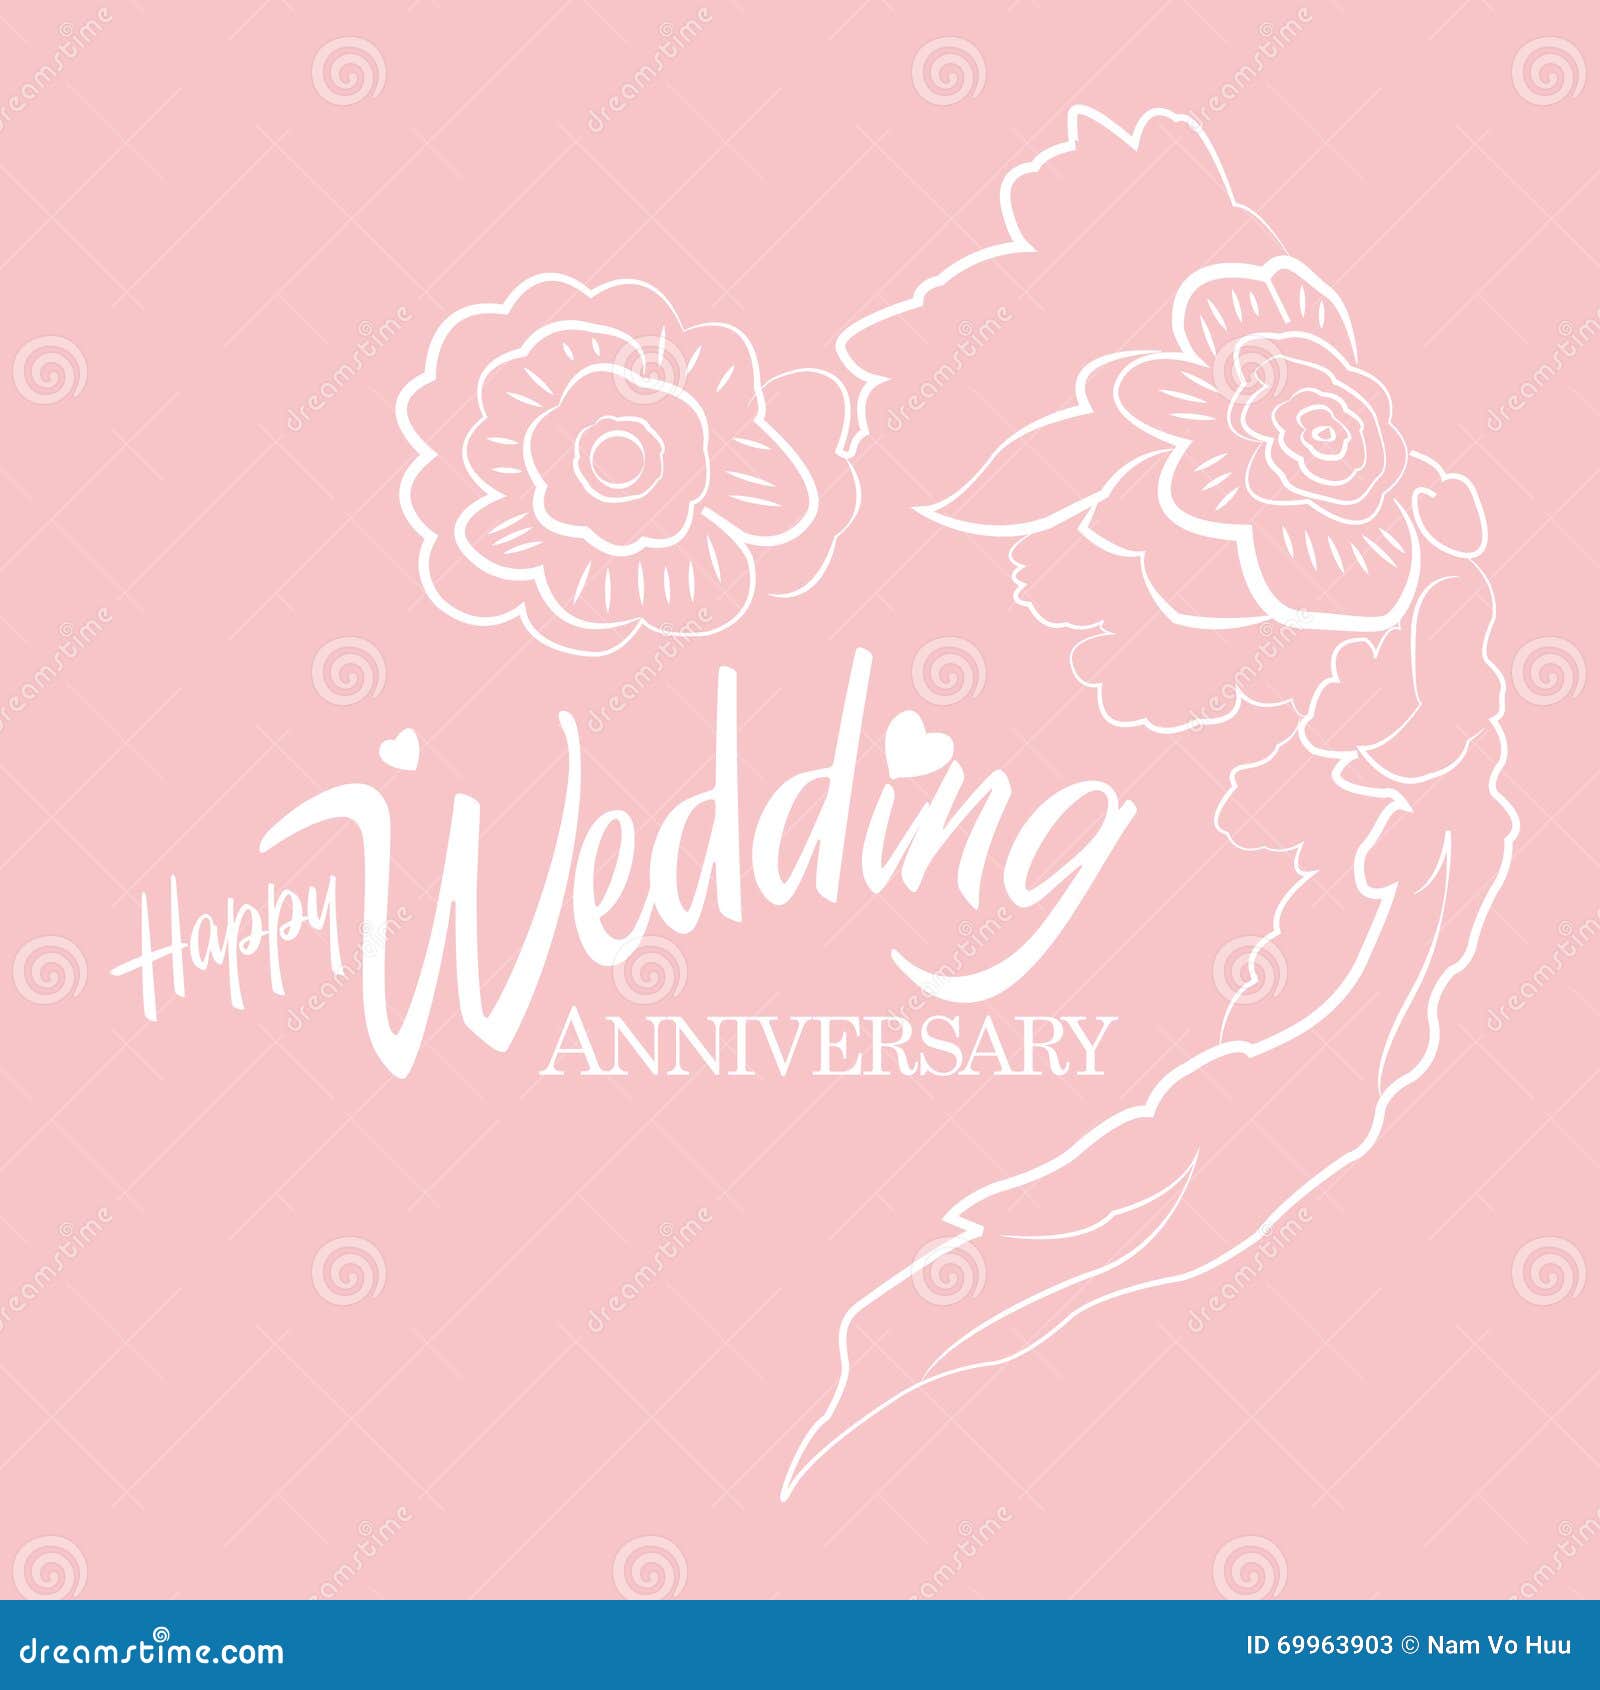 Happy Wedding  Anniversary  Stock Image CartoonDealer com 